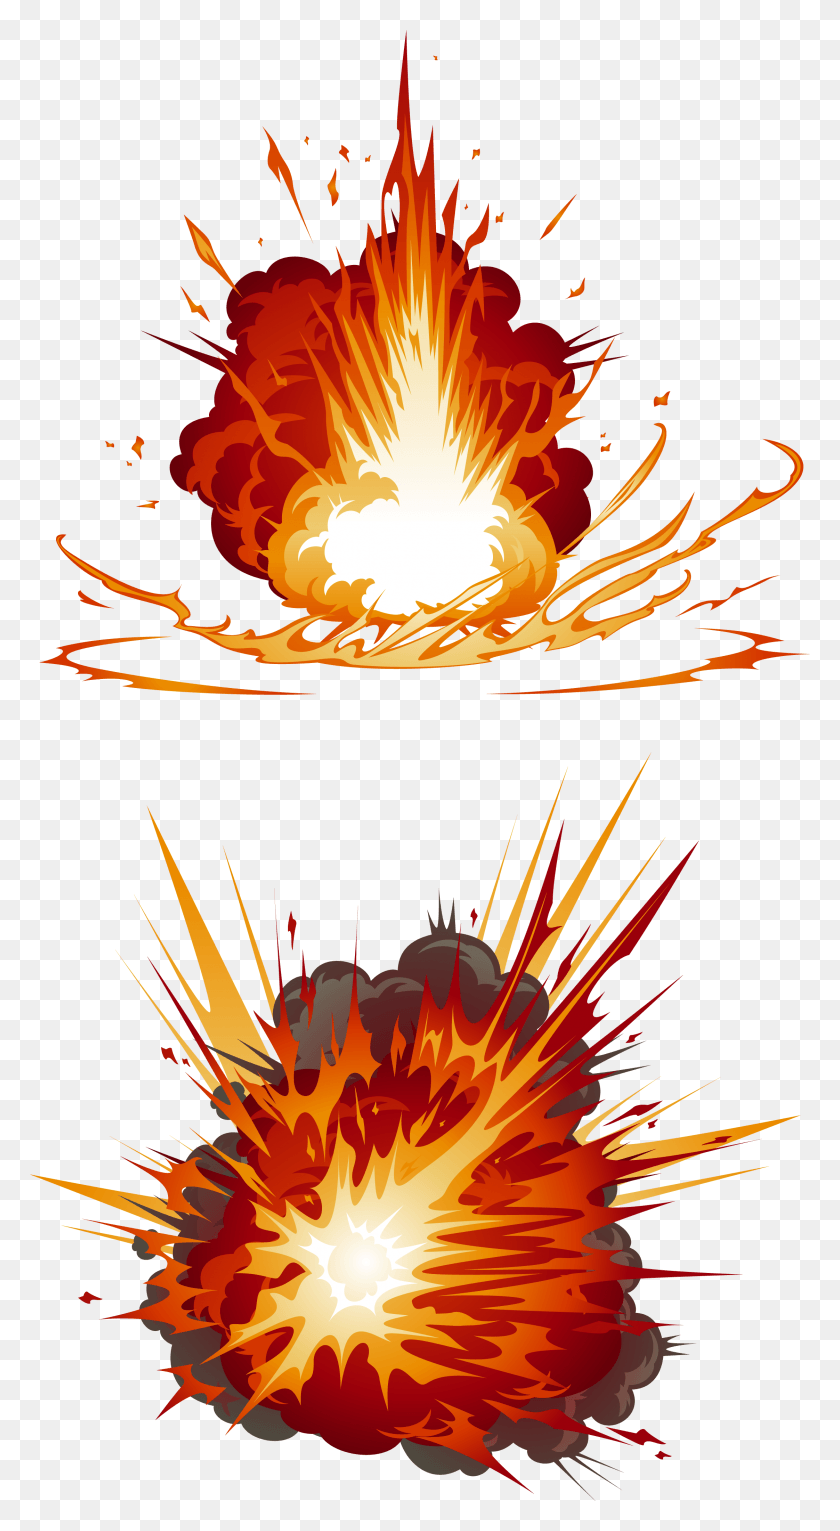 2244x4232 Descargar Png Clip Transparente Biblioteca Blast My Firecracker Explosion Explosion Fire Cartoon, Outdoors, Graphics Hd Png